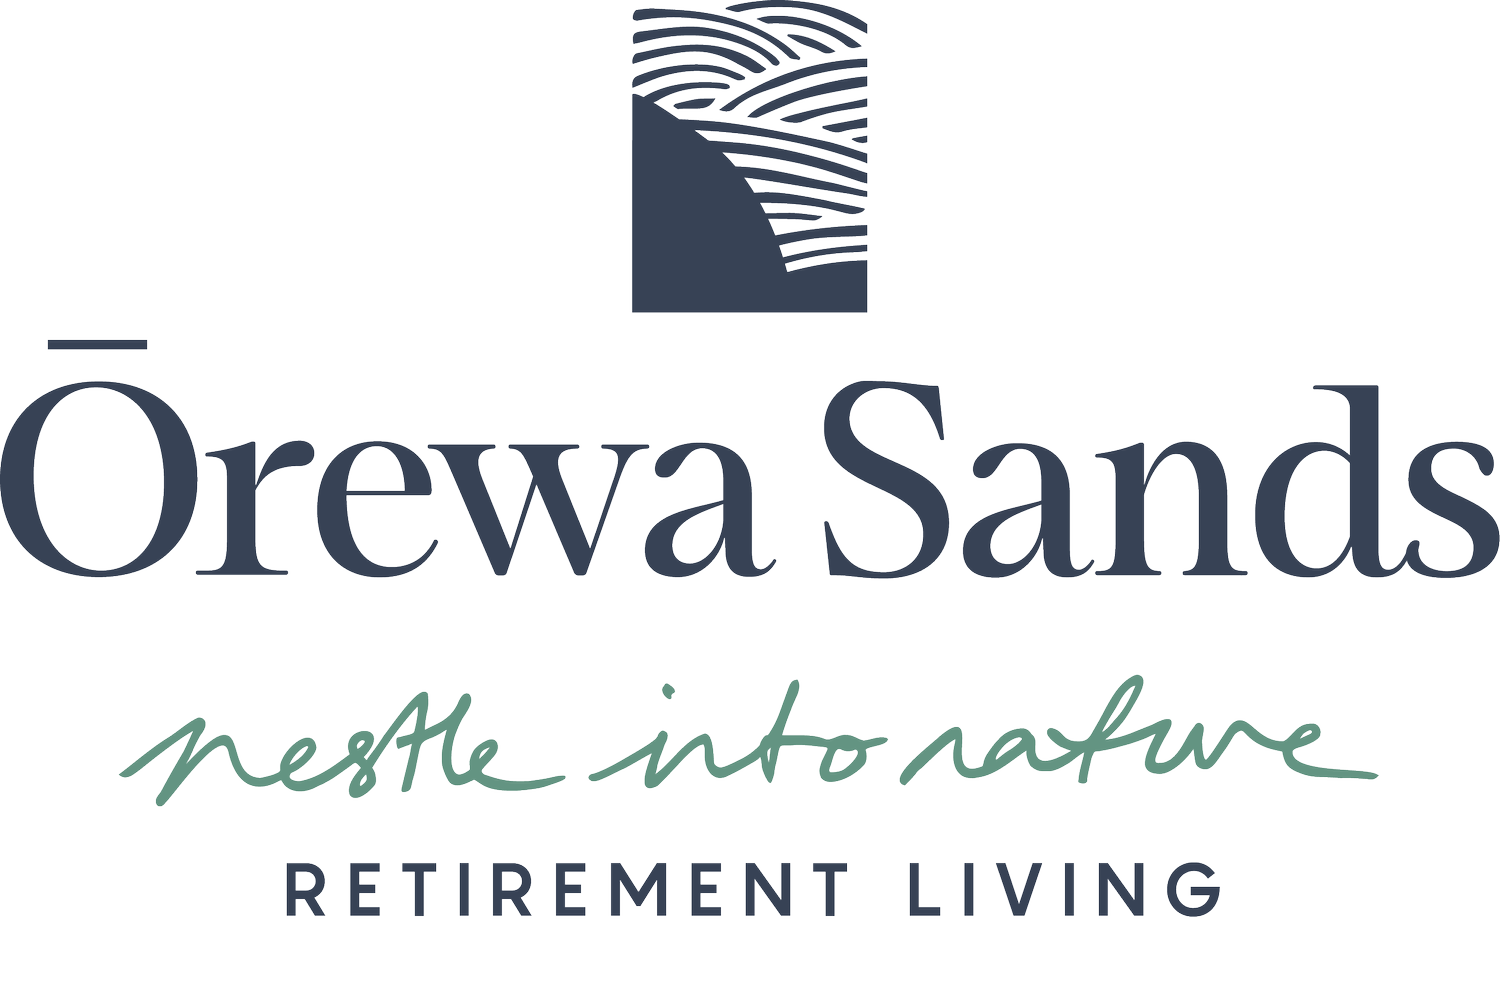 Orewa Sands Senior Living